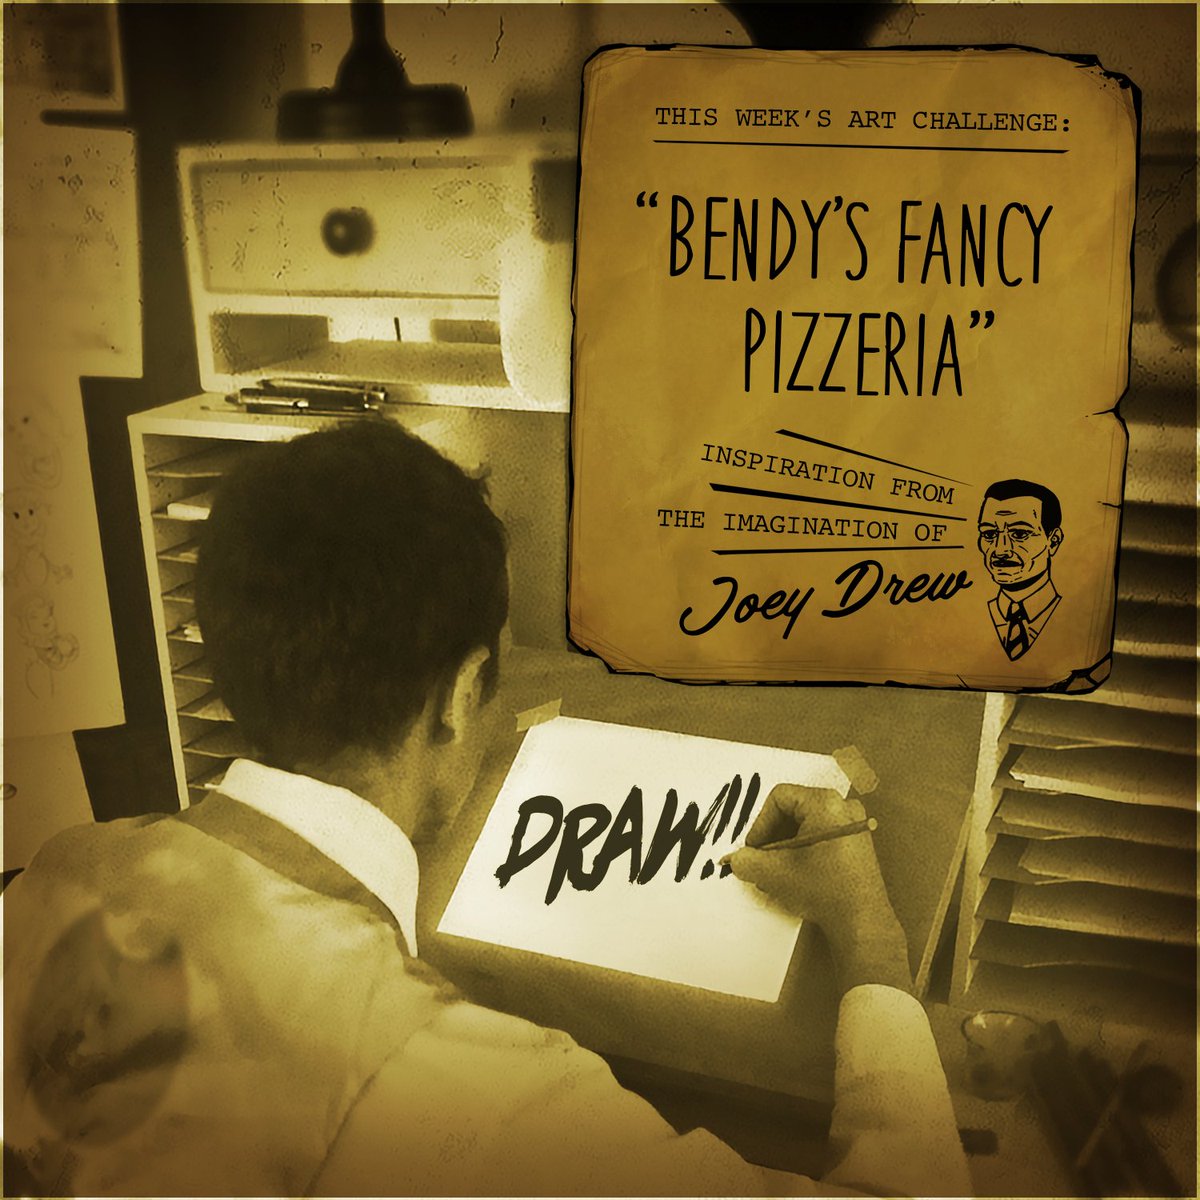 Pizza! Bendy pizza! Let’s see your artist’s interpretation! 🎨🖌️ This week’s art challenge has been placed on your desk. Go! #JoeysArtChallenge